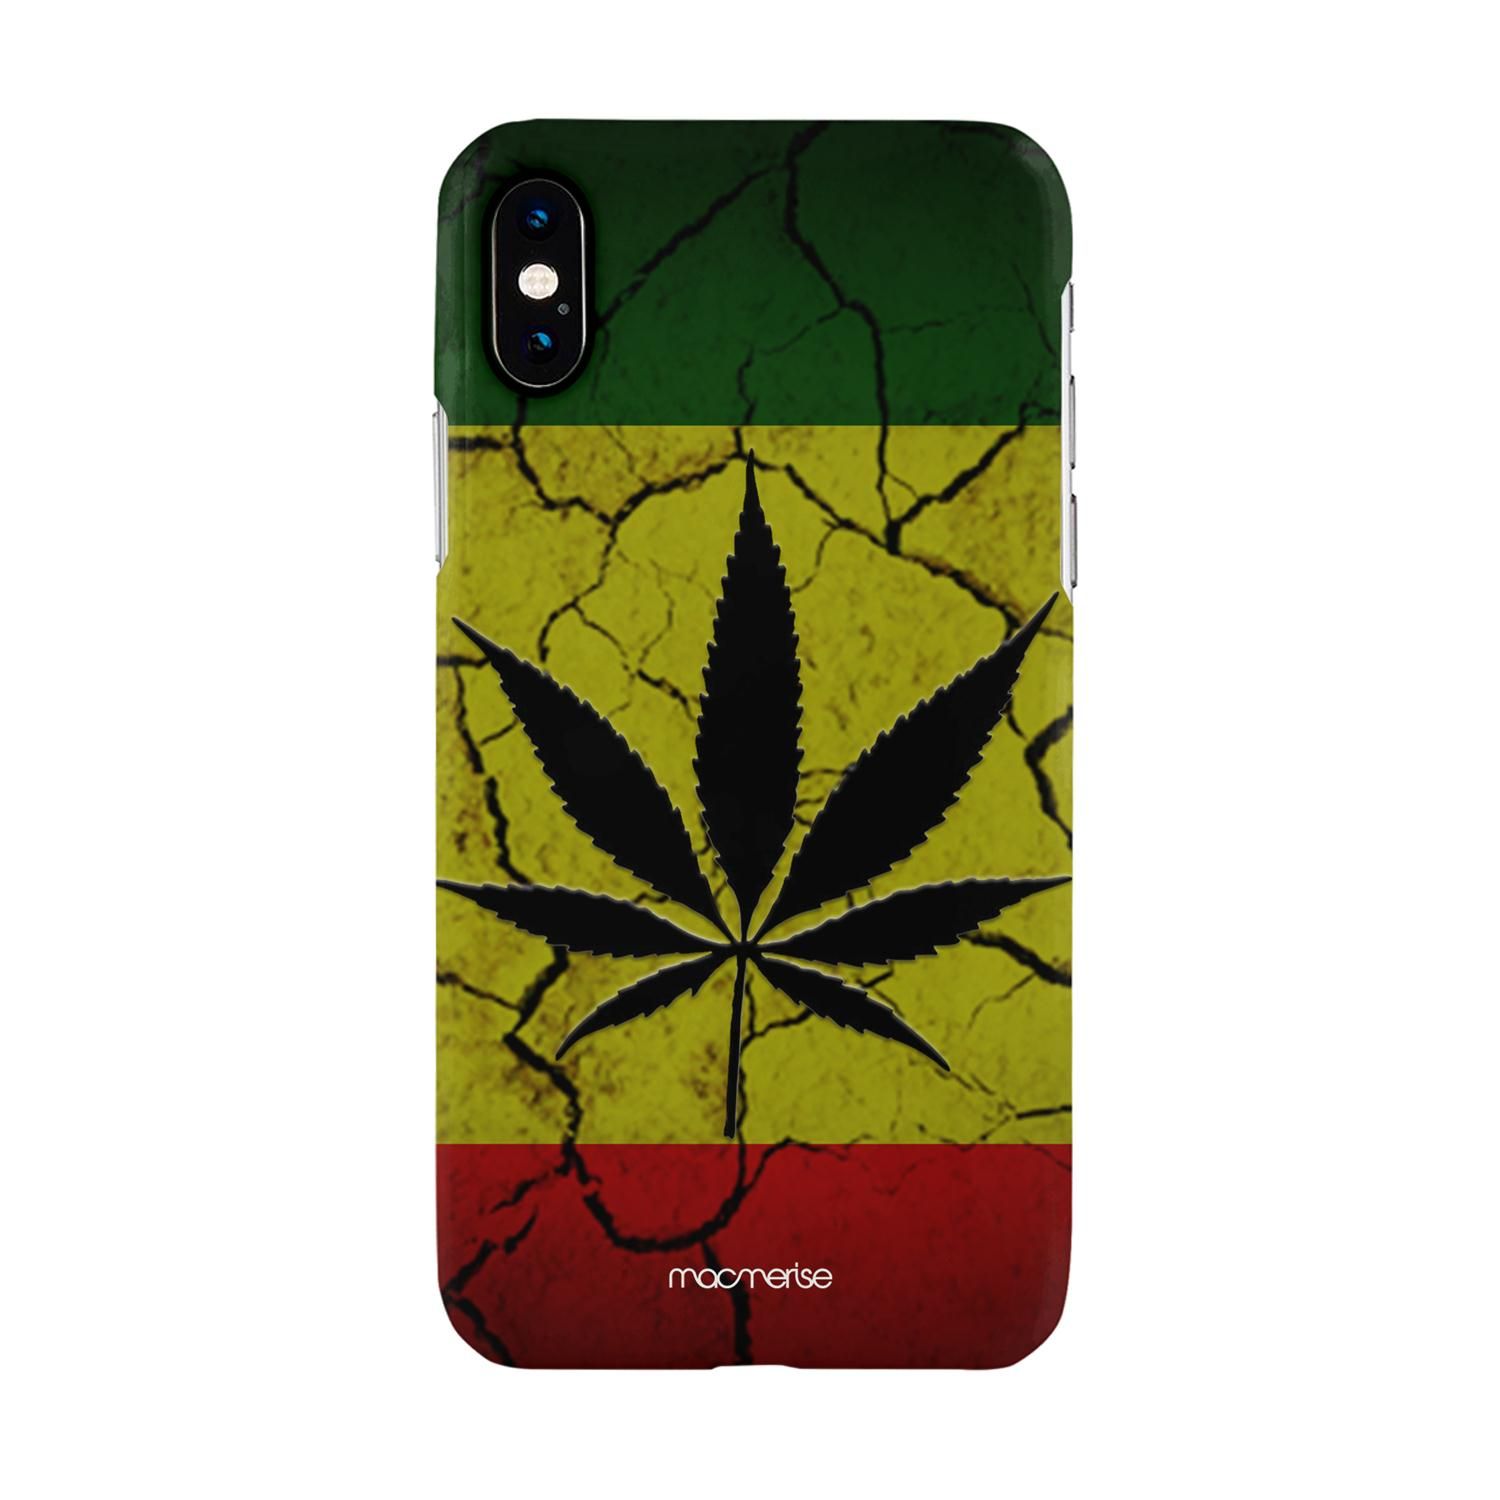 Rastafari - Sleek Phone Case for iPhone XS Max